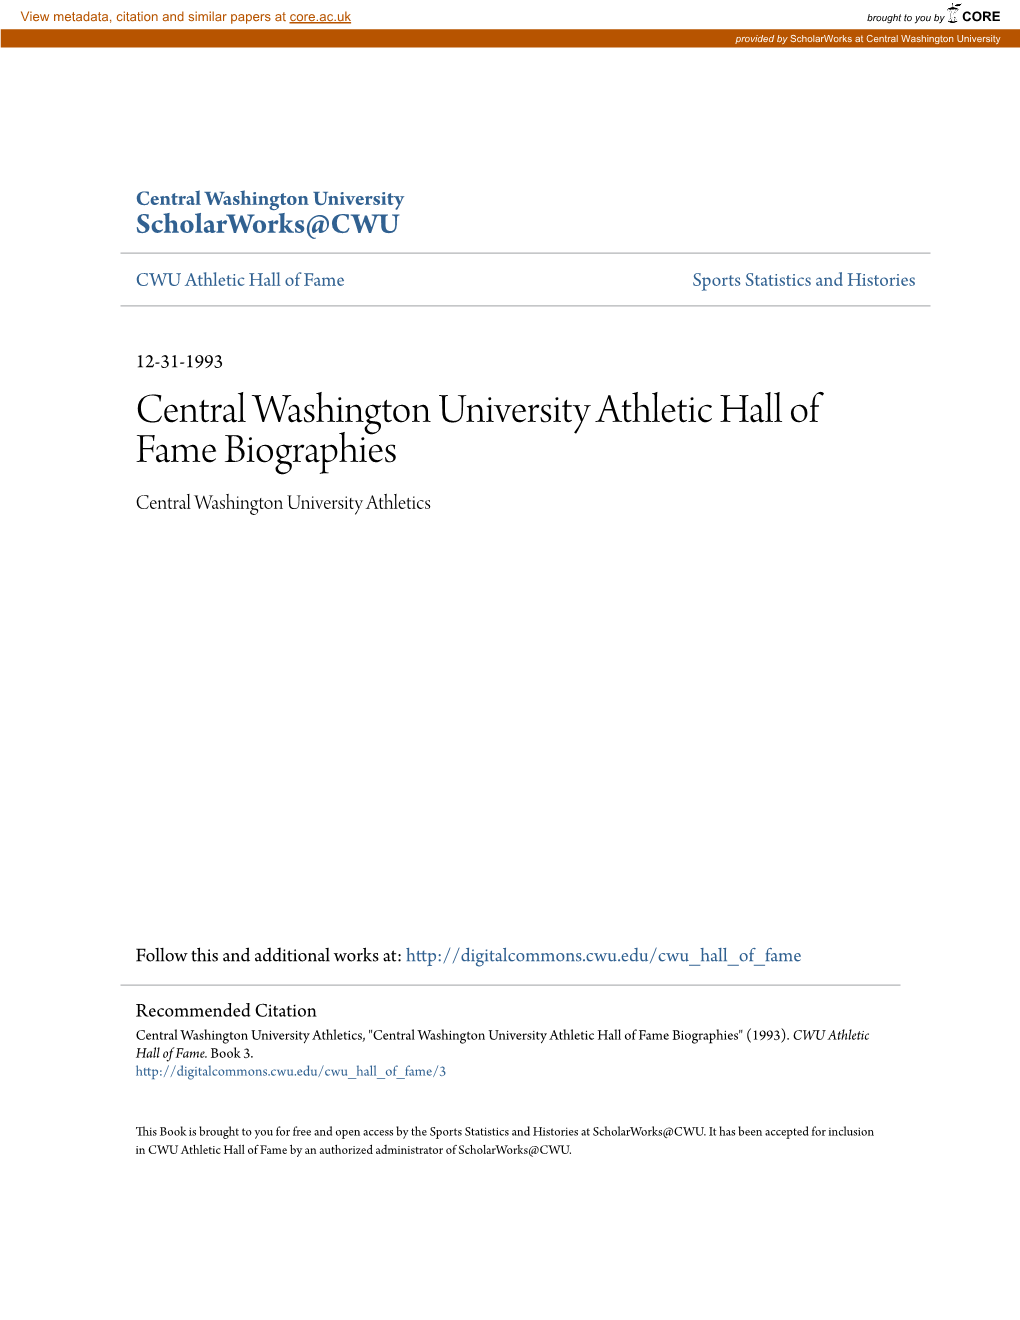 Central Washington University Athletic Hall of Fame Biographies Central Washington University Athletics